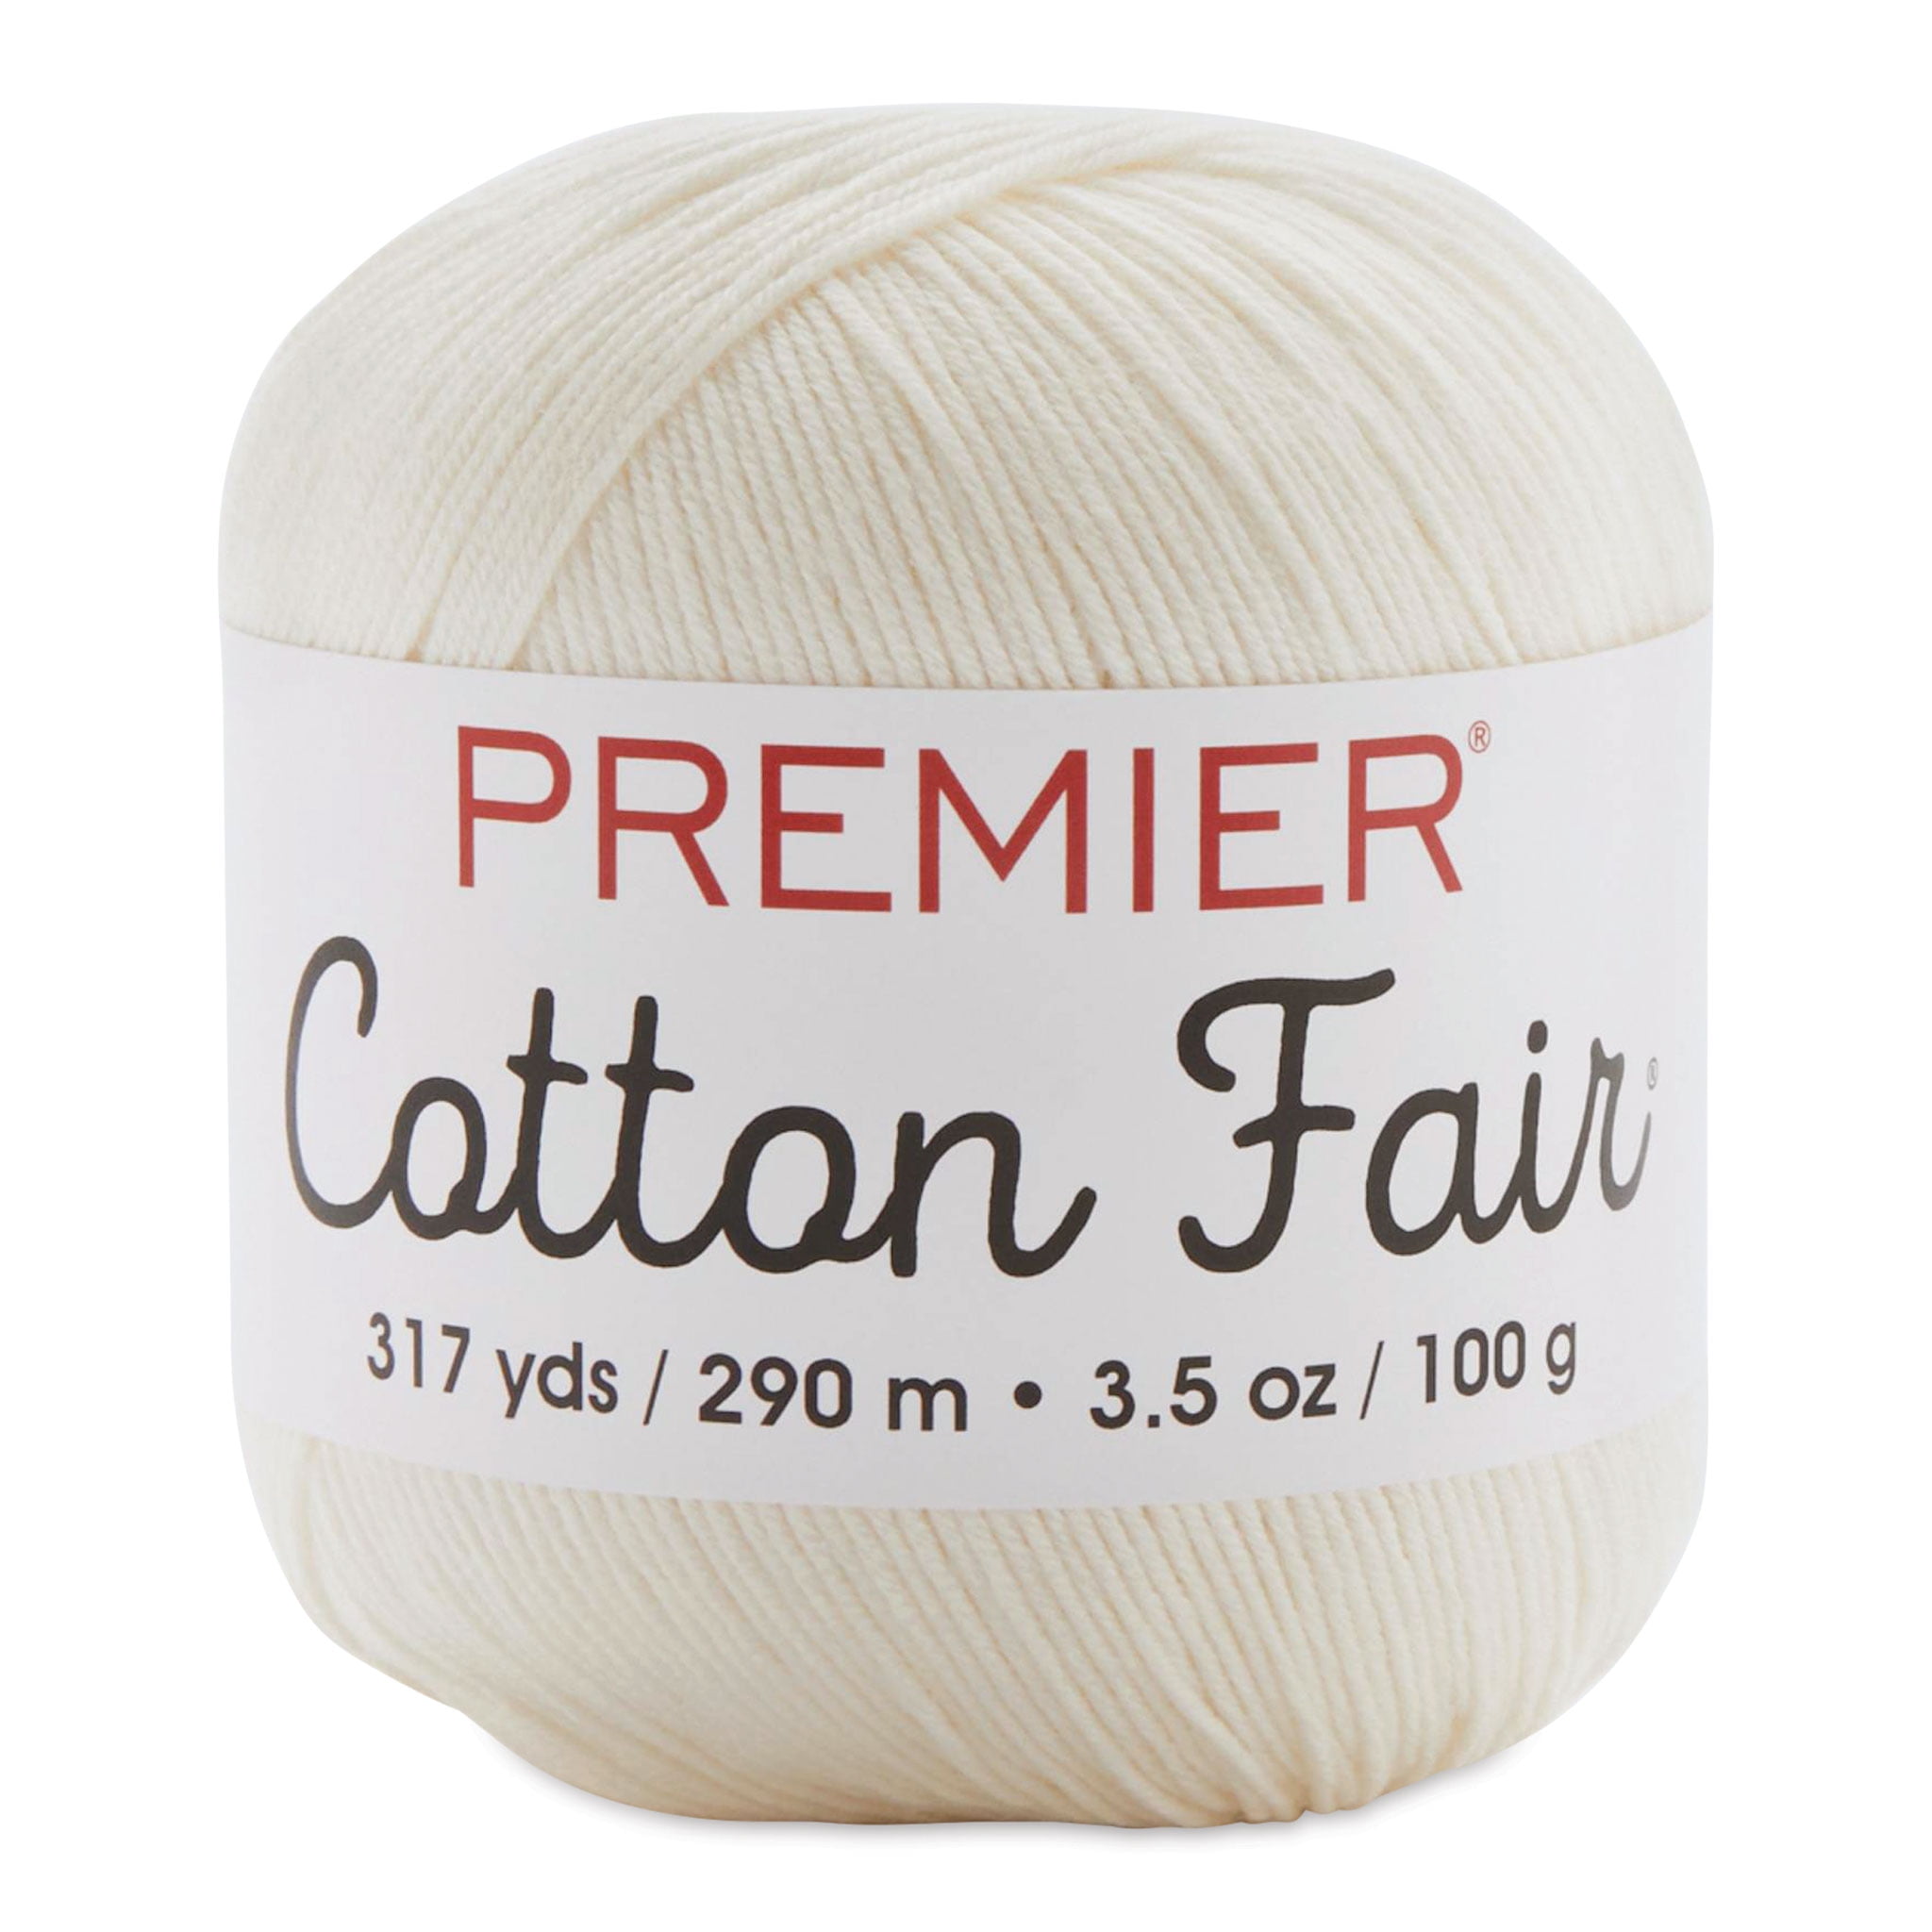 . Cotton Fair Solid Yarn Black